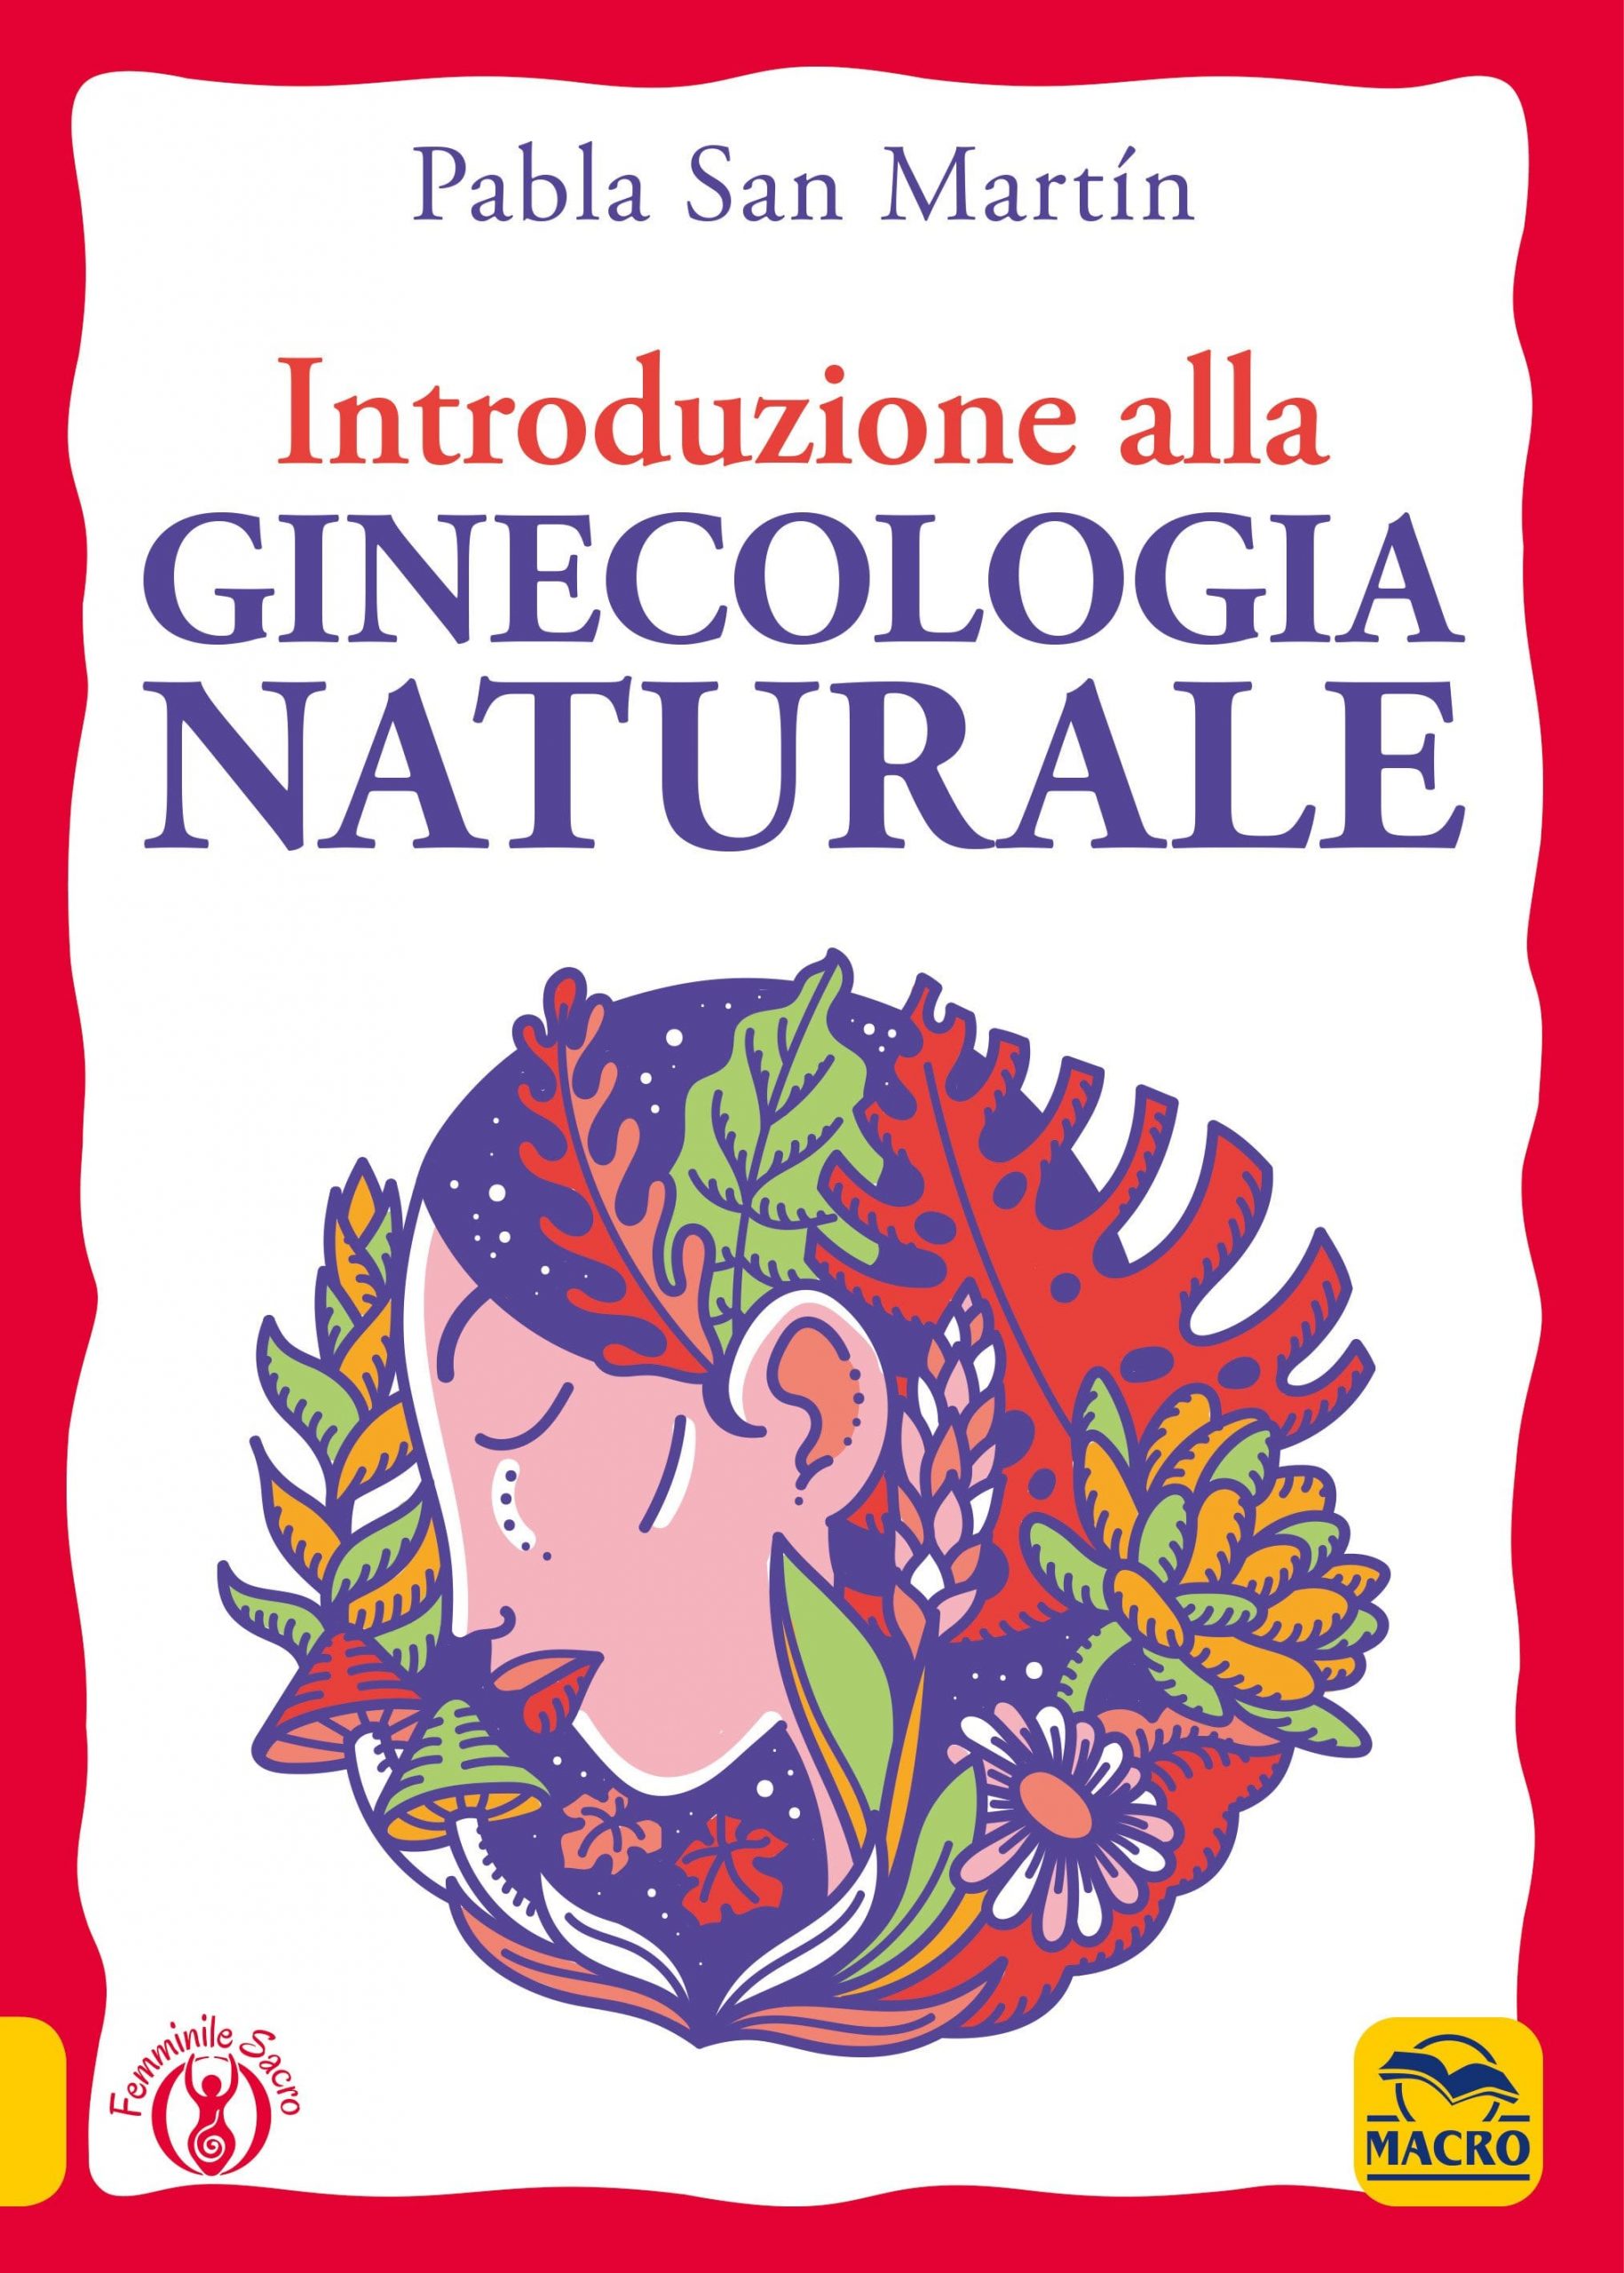 introduzione-alla-ginecologia-naturale-copertina-300dpi